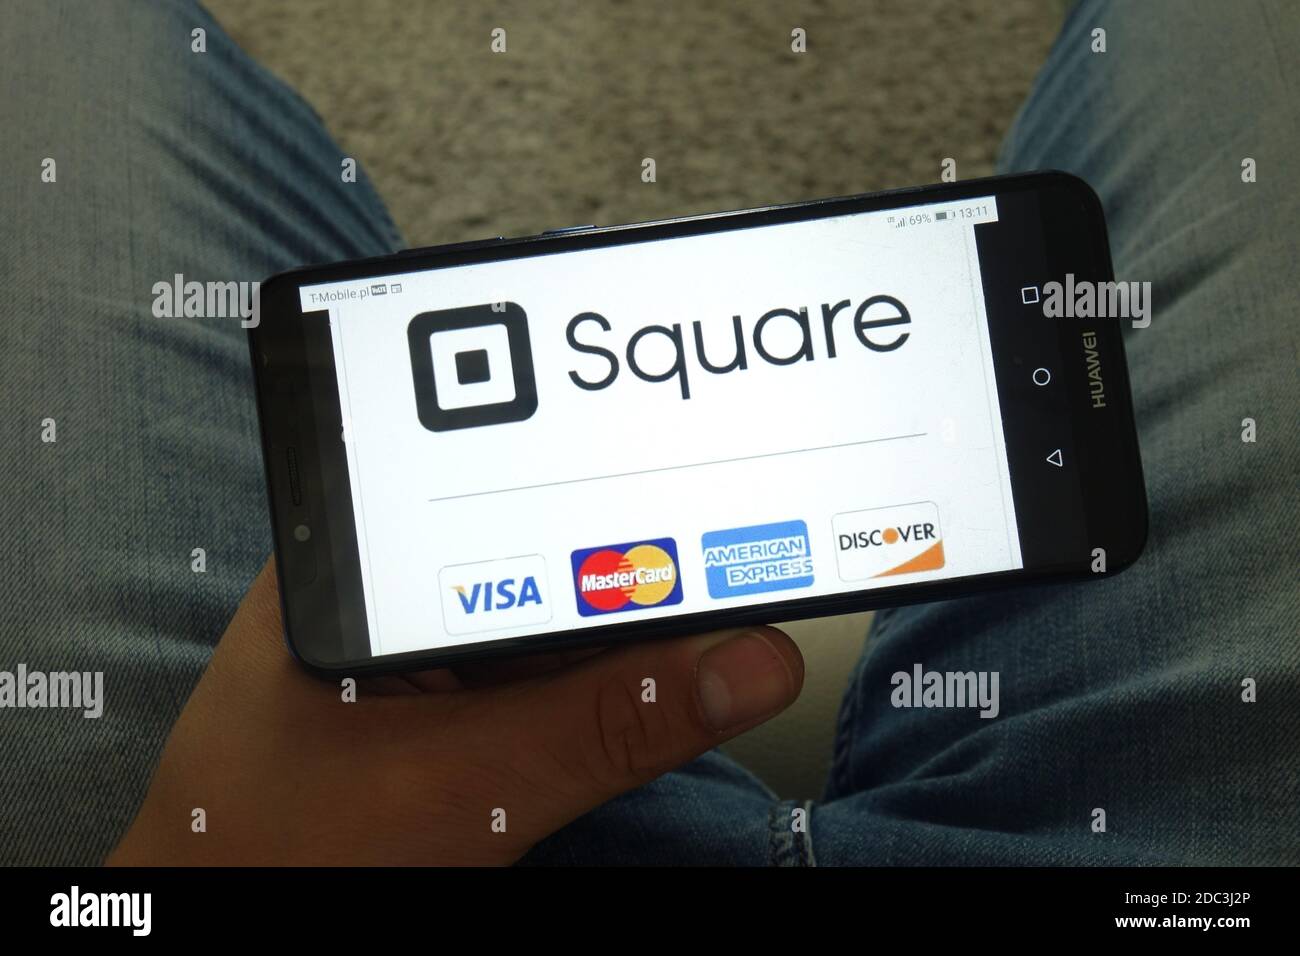 KONSKIE, POLEN - 29. Juni 2019: Firma Square Inc. Mit Visa MasterCard American Express und Discover Logos auf dem Mobiltelefon Stockfoto